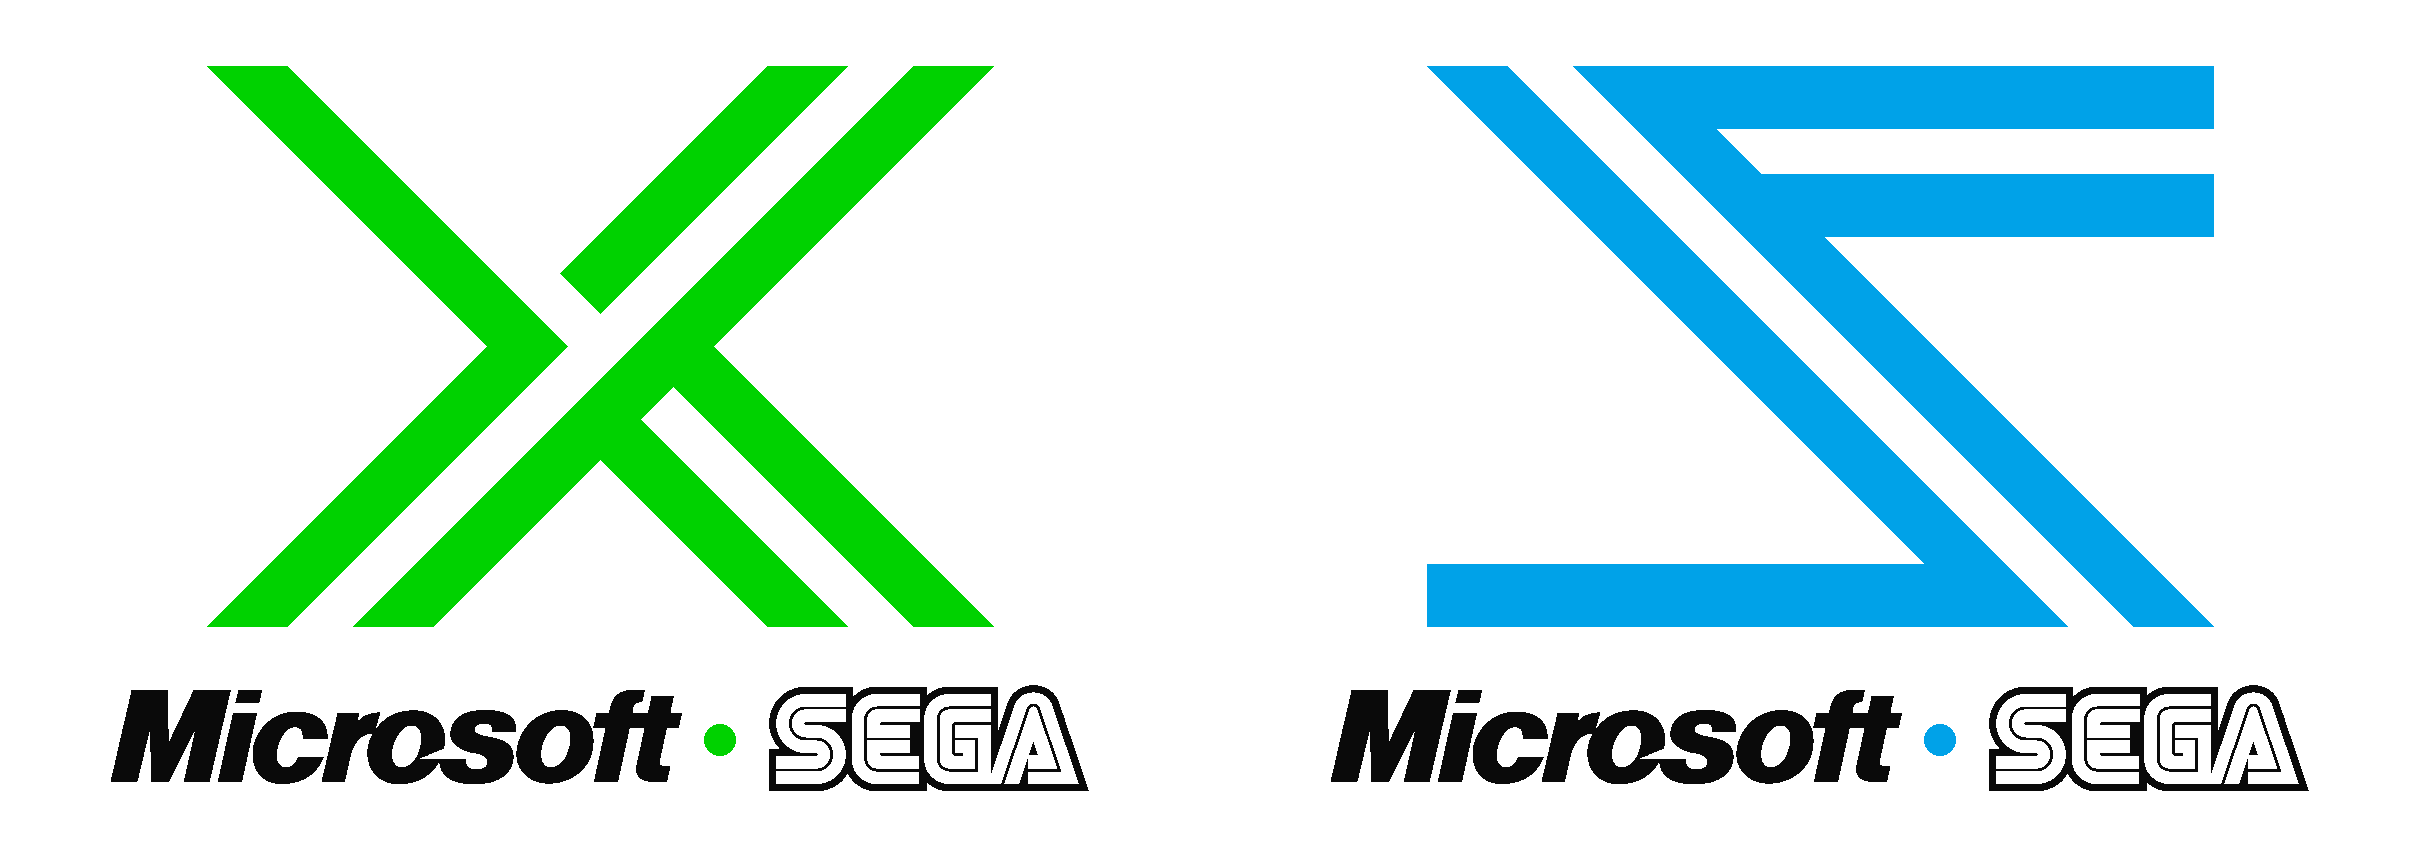 Microsoft-Sega-X-S-console-logos.png